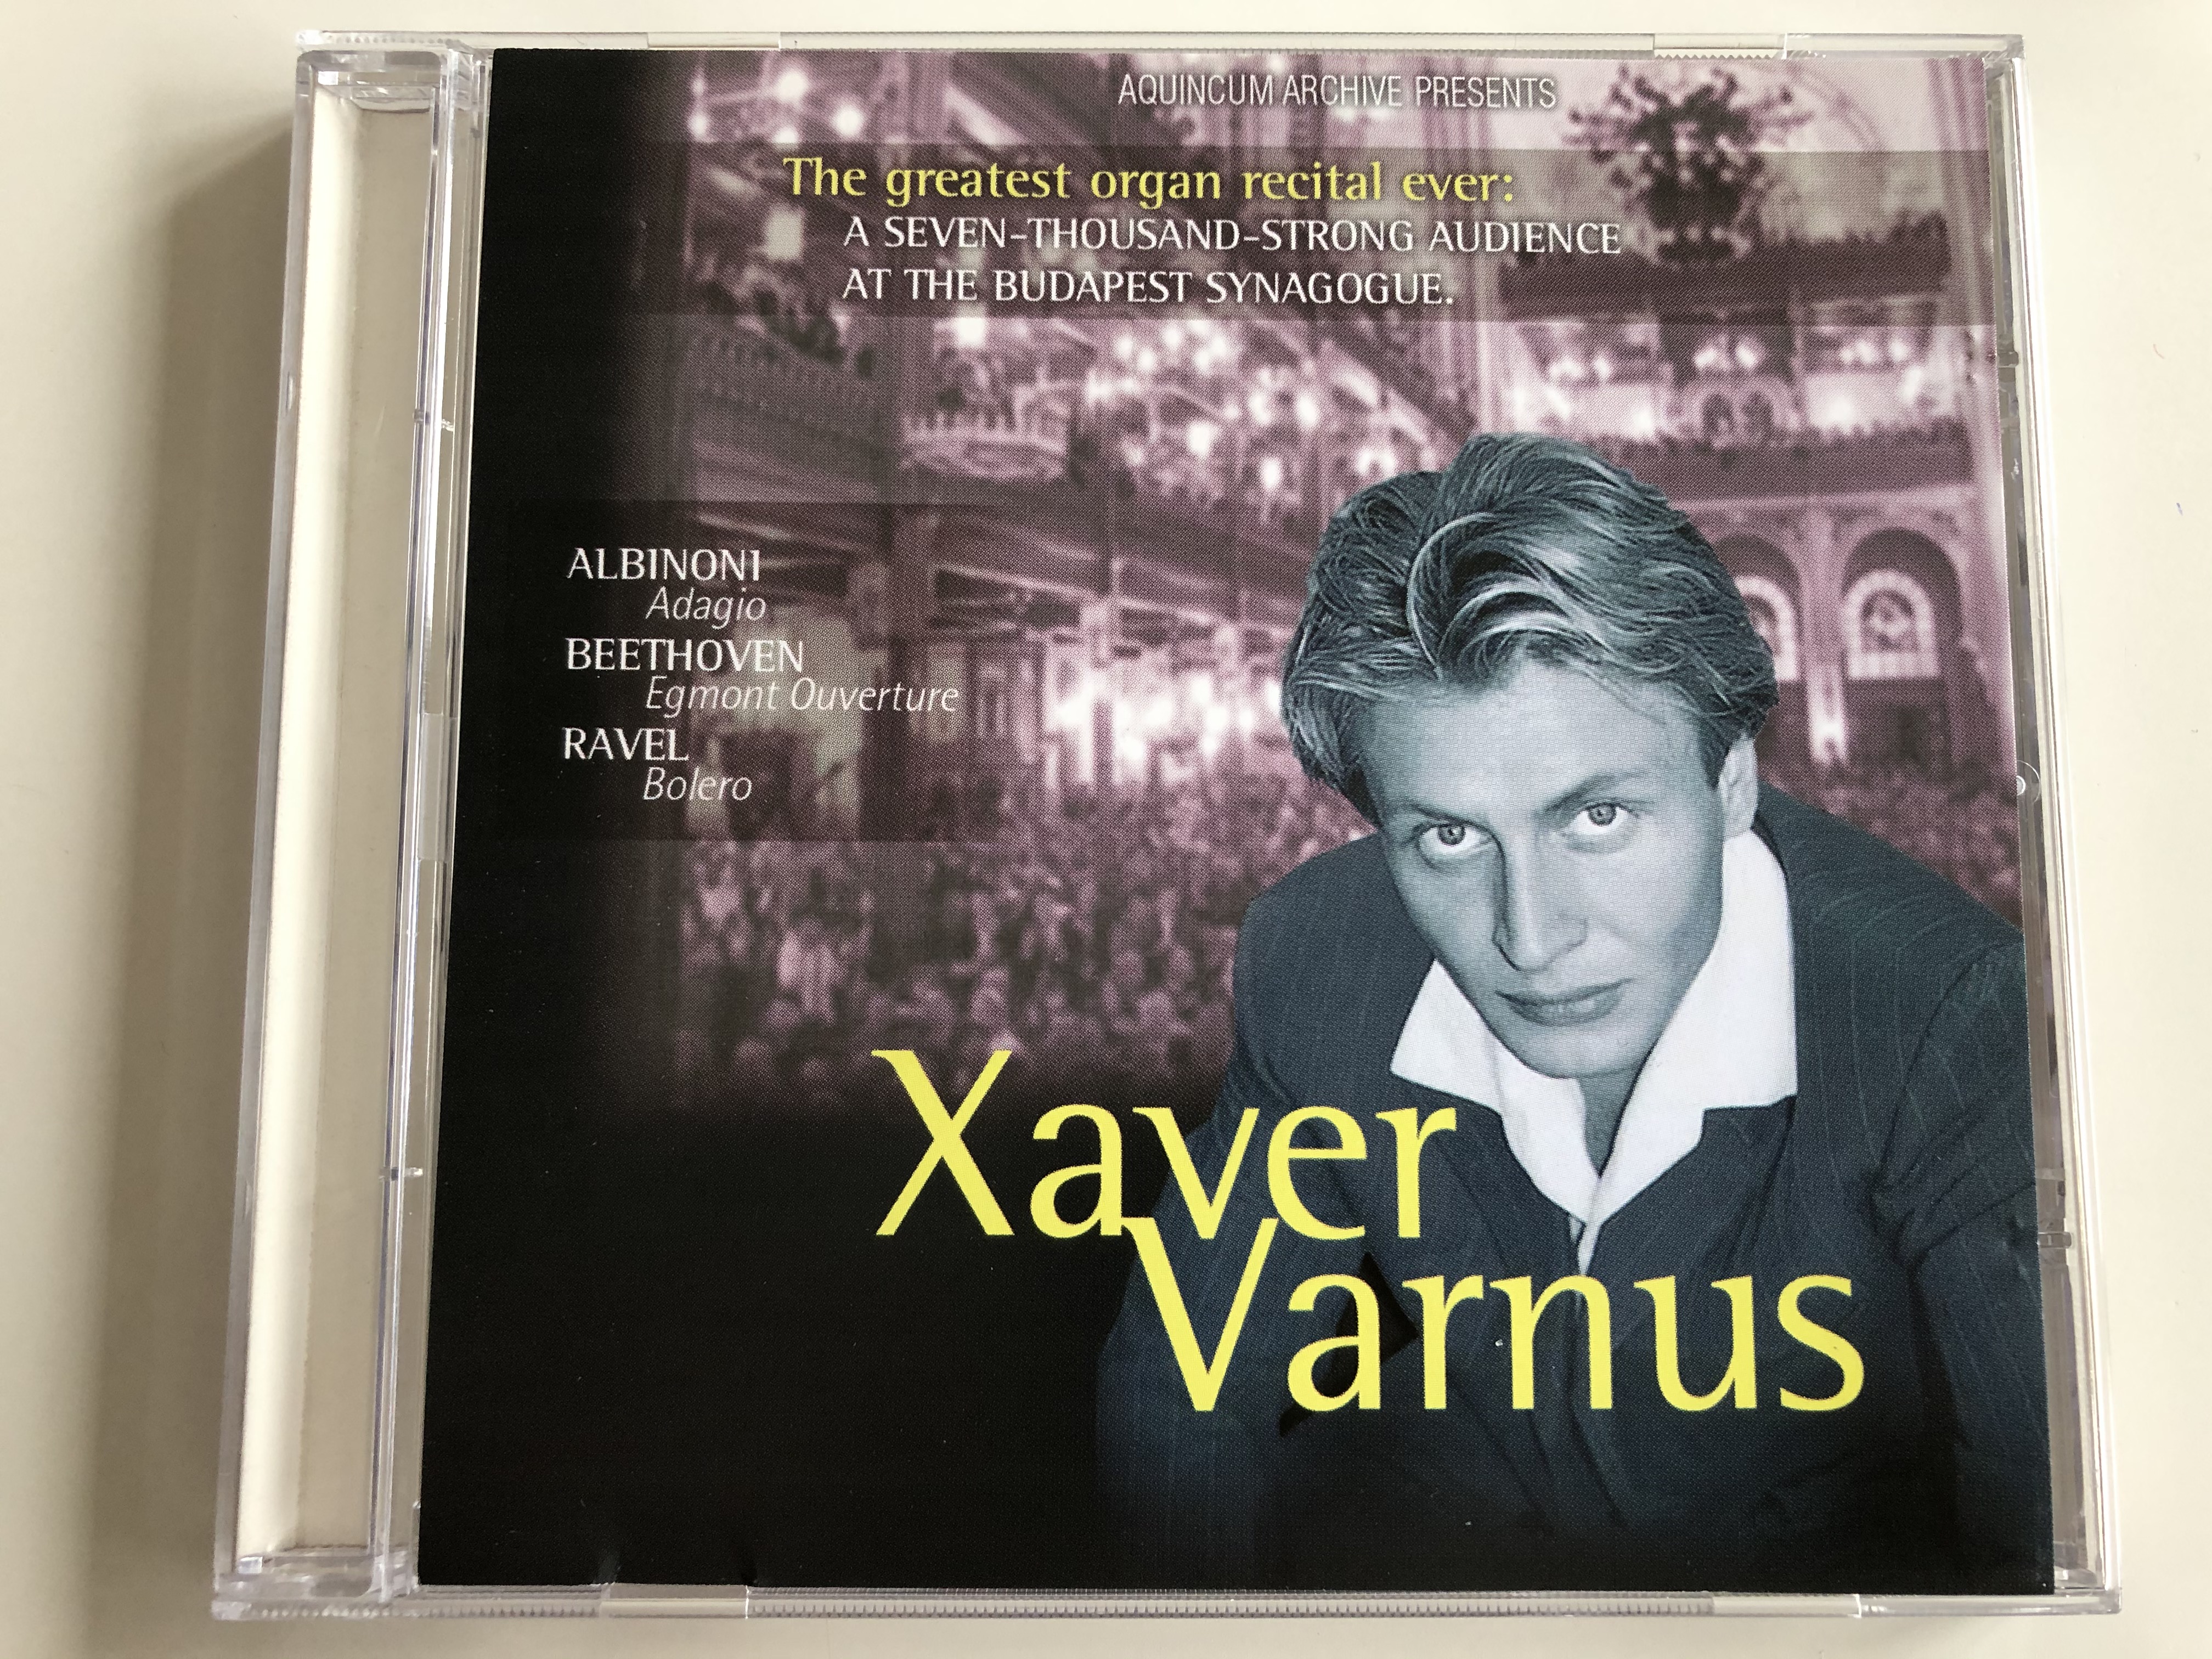 xaver-varnus-the-greatest-organ-recital-ever-a-seven-thousand-strong-audience-at-the-budapest-synagogue-albinoni-adagio-beethoven-egmont-ouverture-ravel-bolero-aquincum-archive-audio-1-.jpg